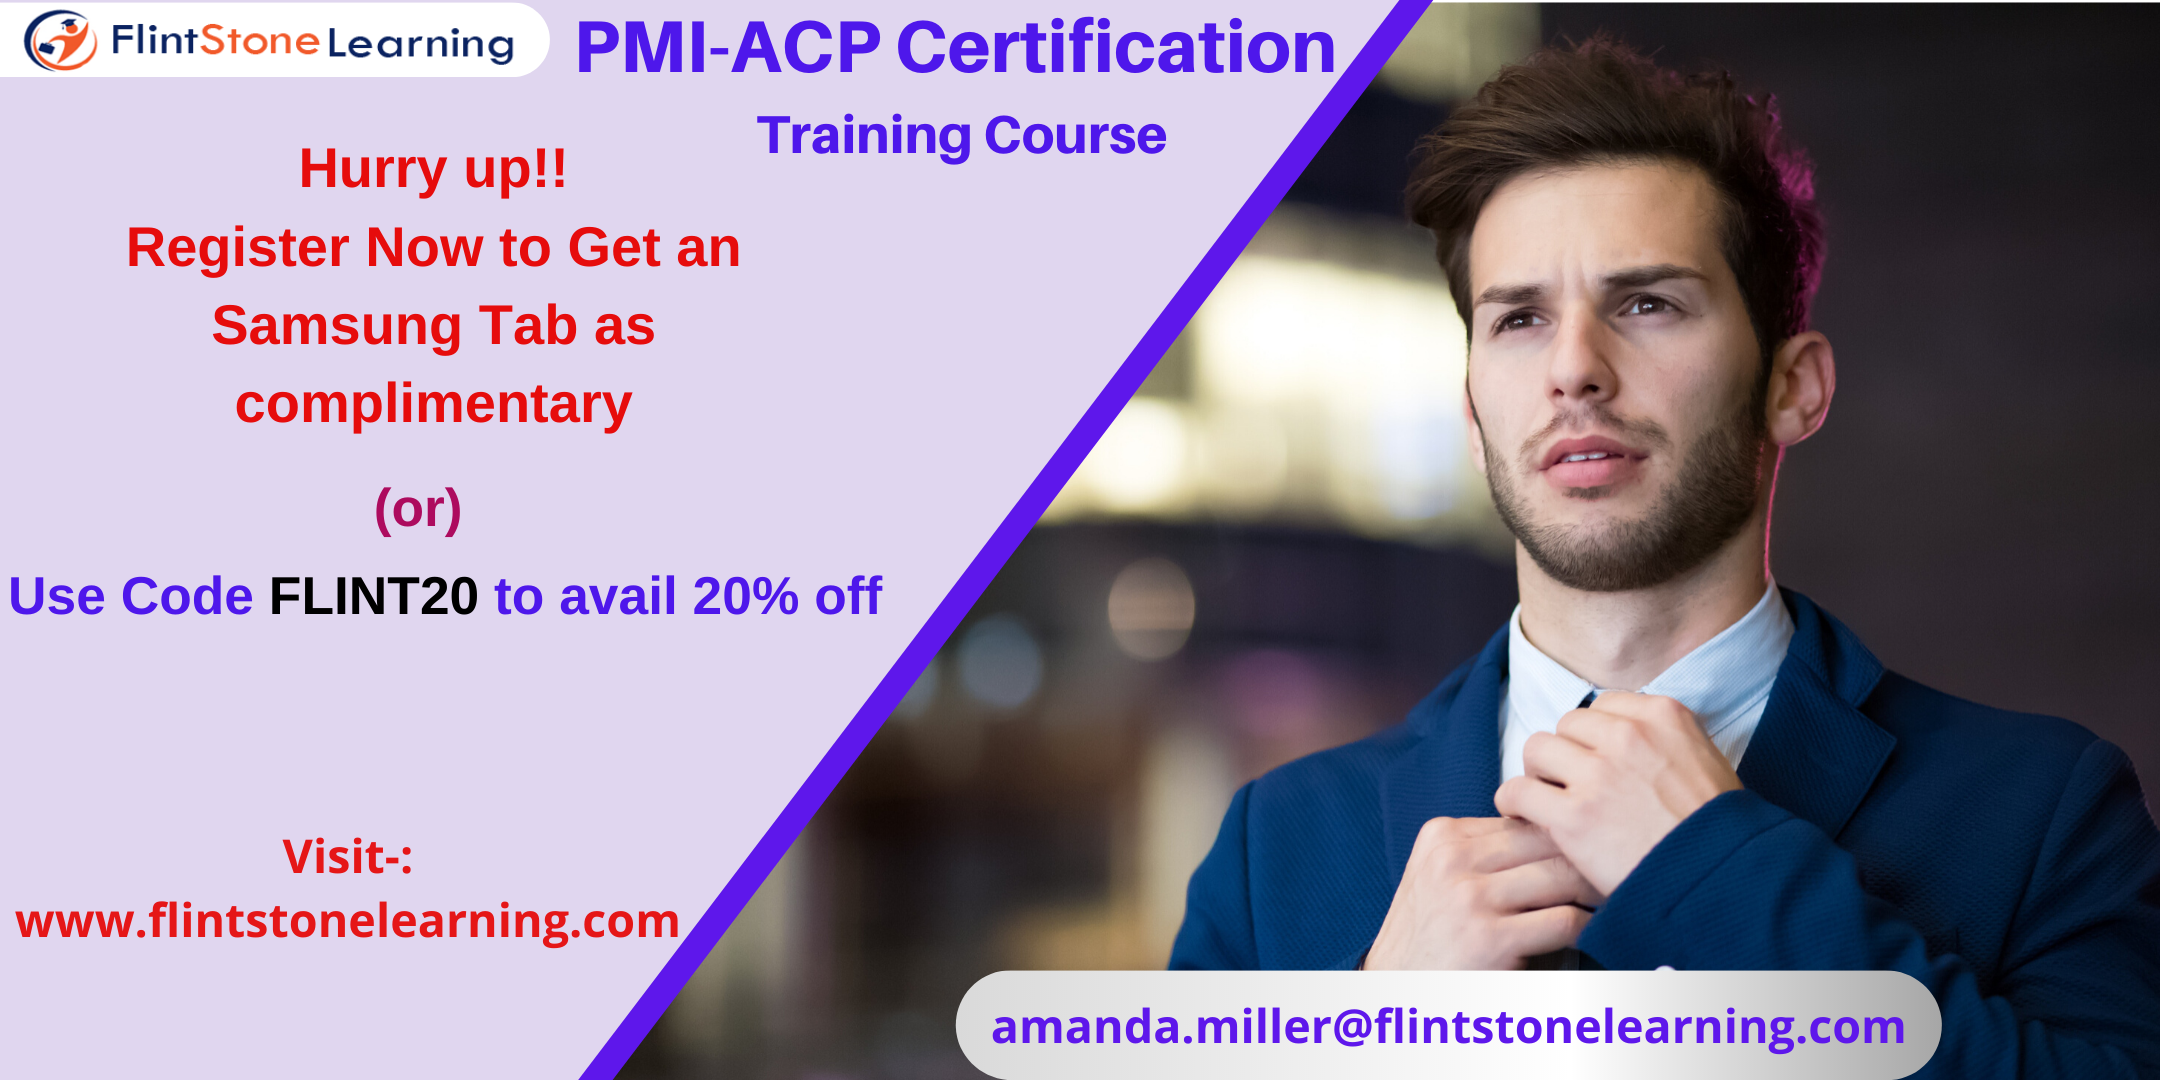 PMI-ACP Certification Training Course in Dubuque, IA